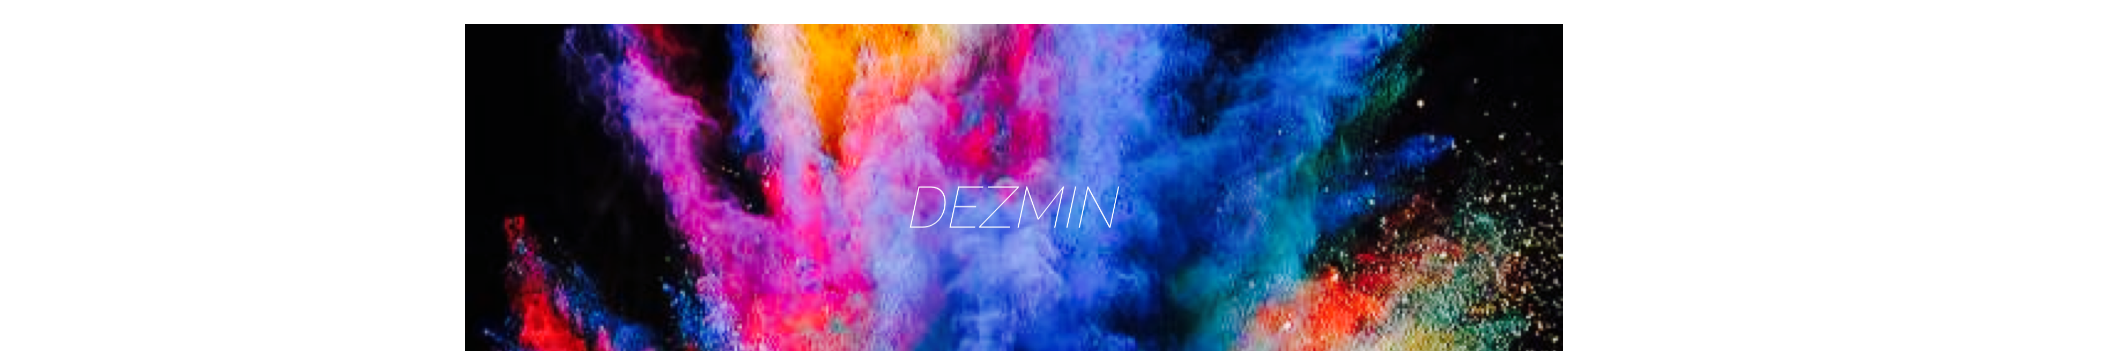 Dezmin